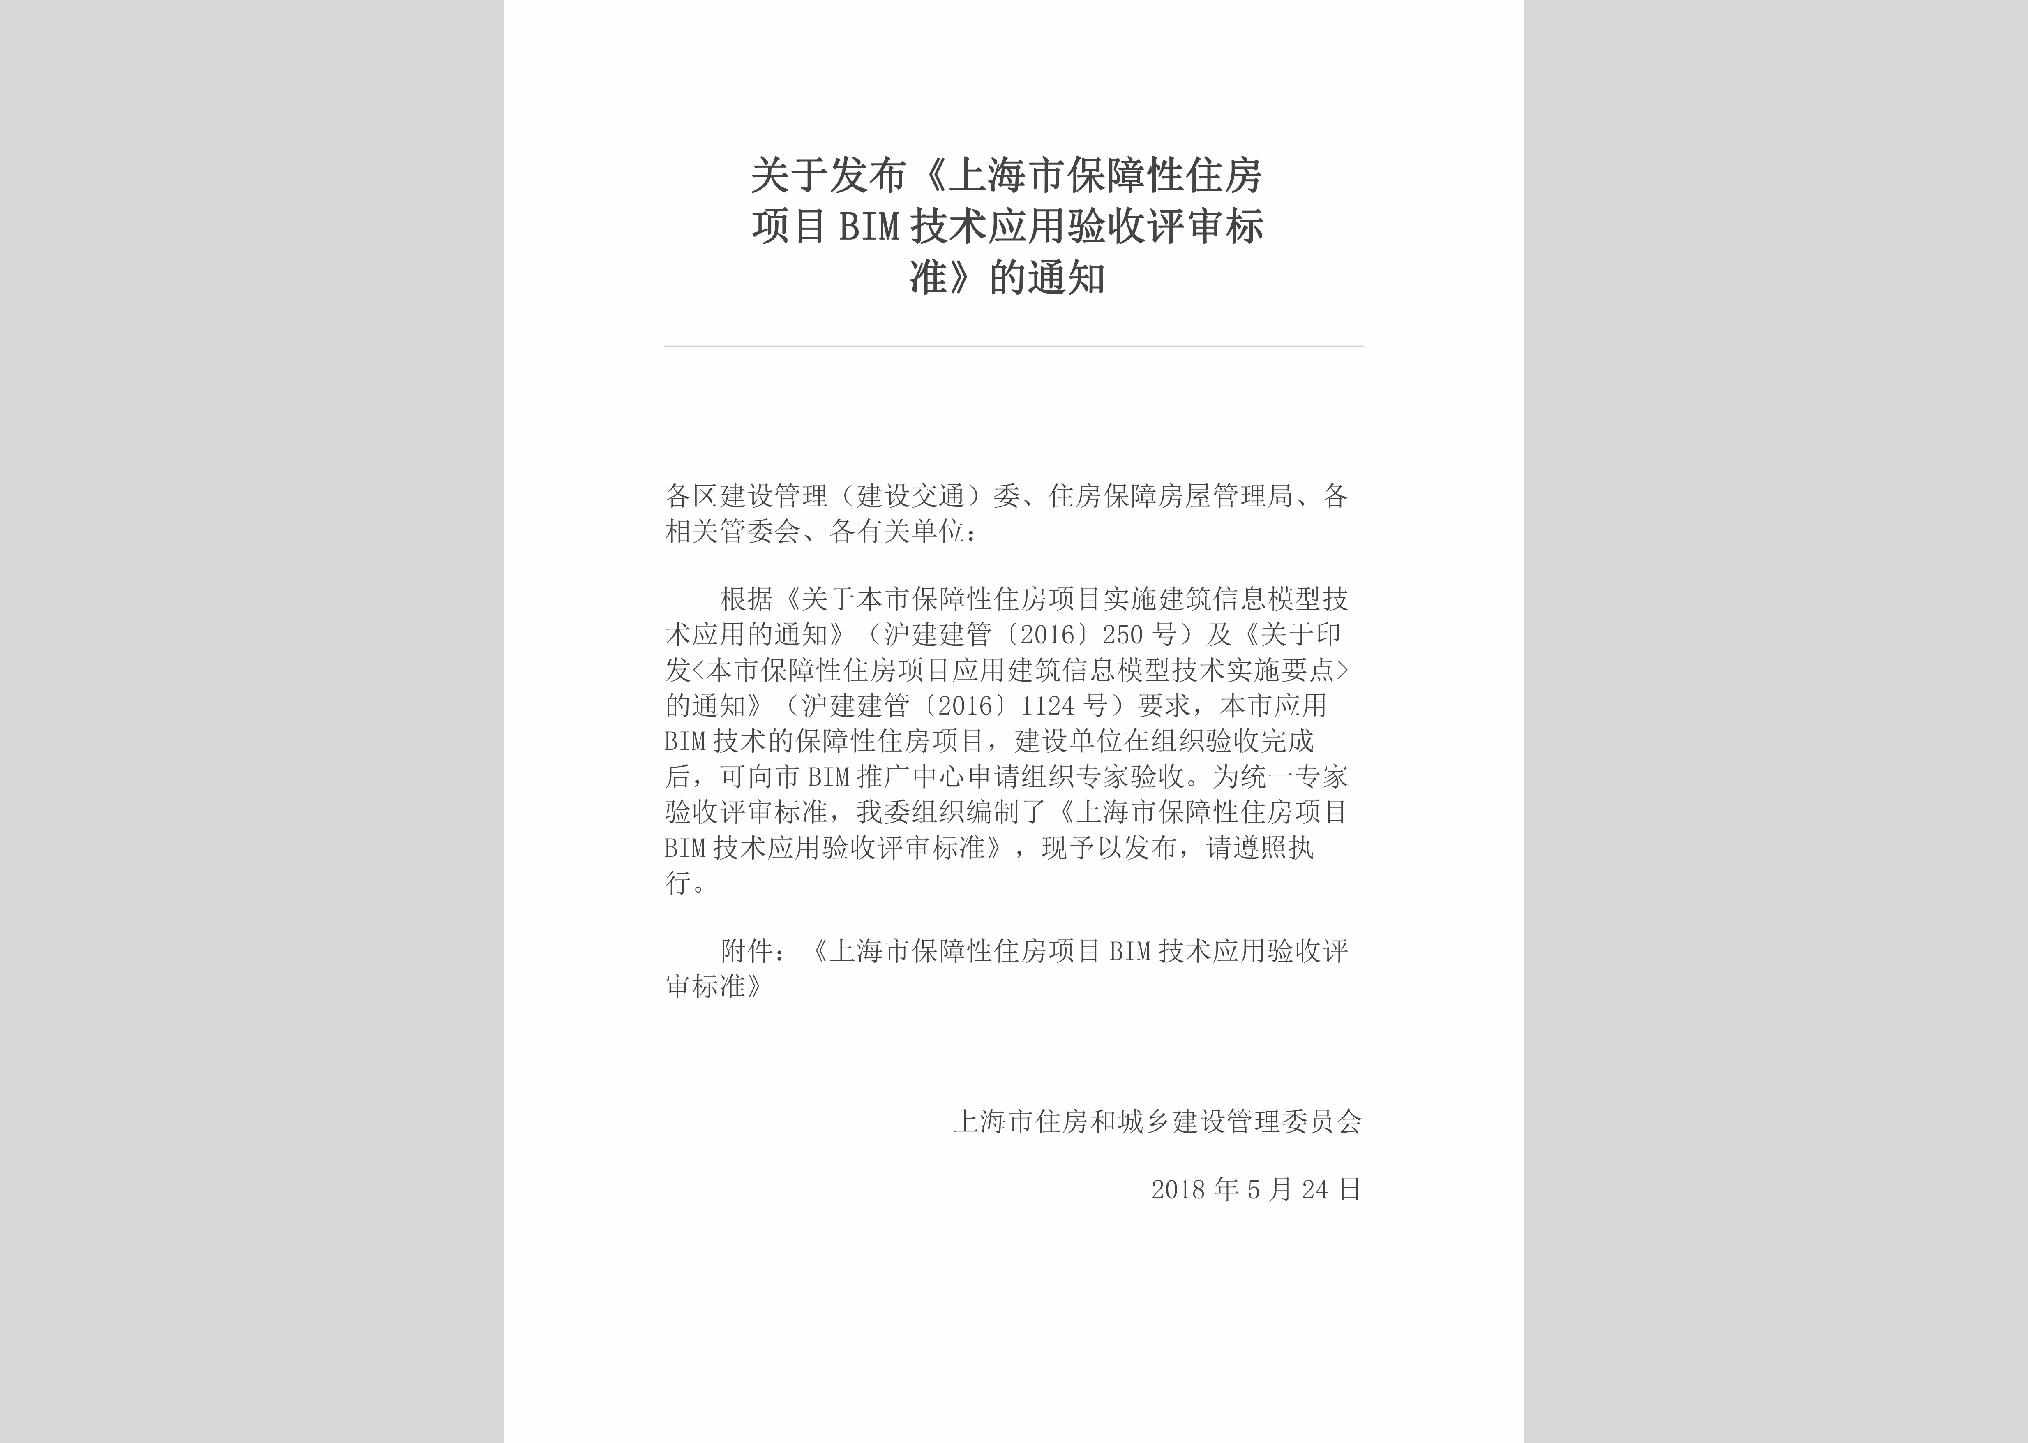 SH-BZXZFXM-2018：关于发布《上海市保障性住房项目BIM技术应用验收评审标准》的通知